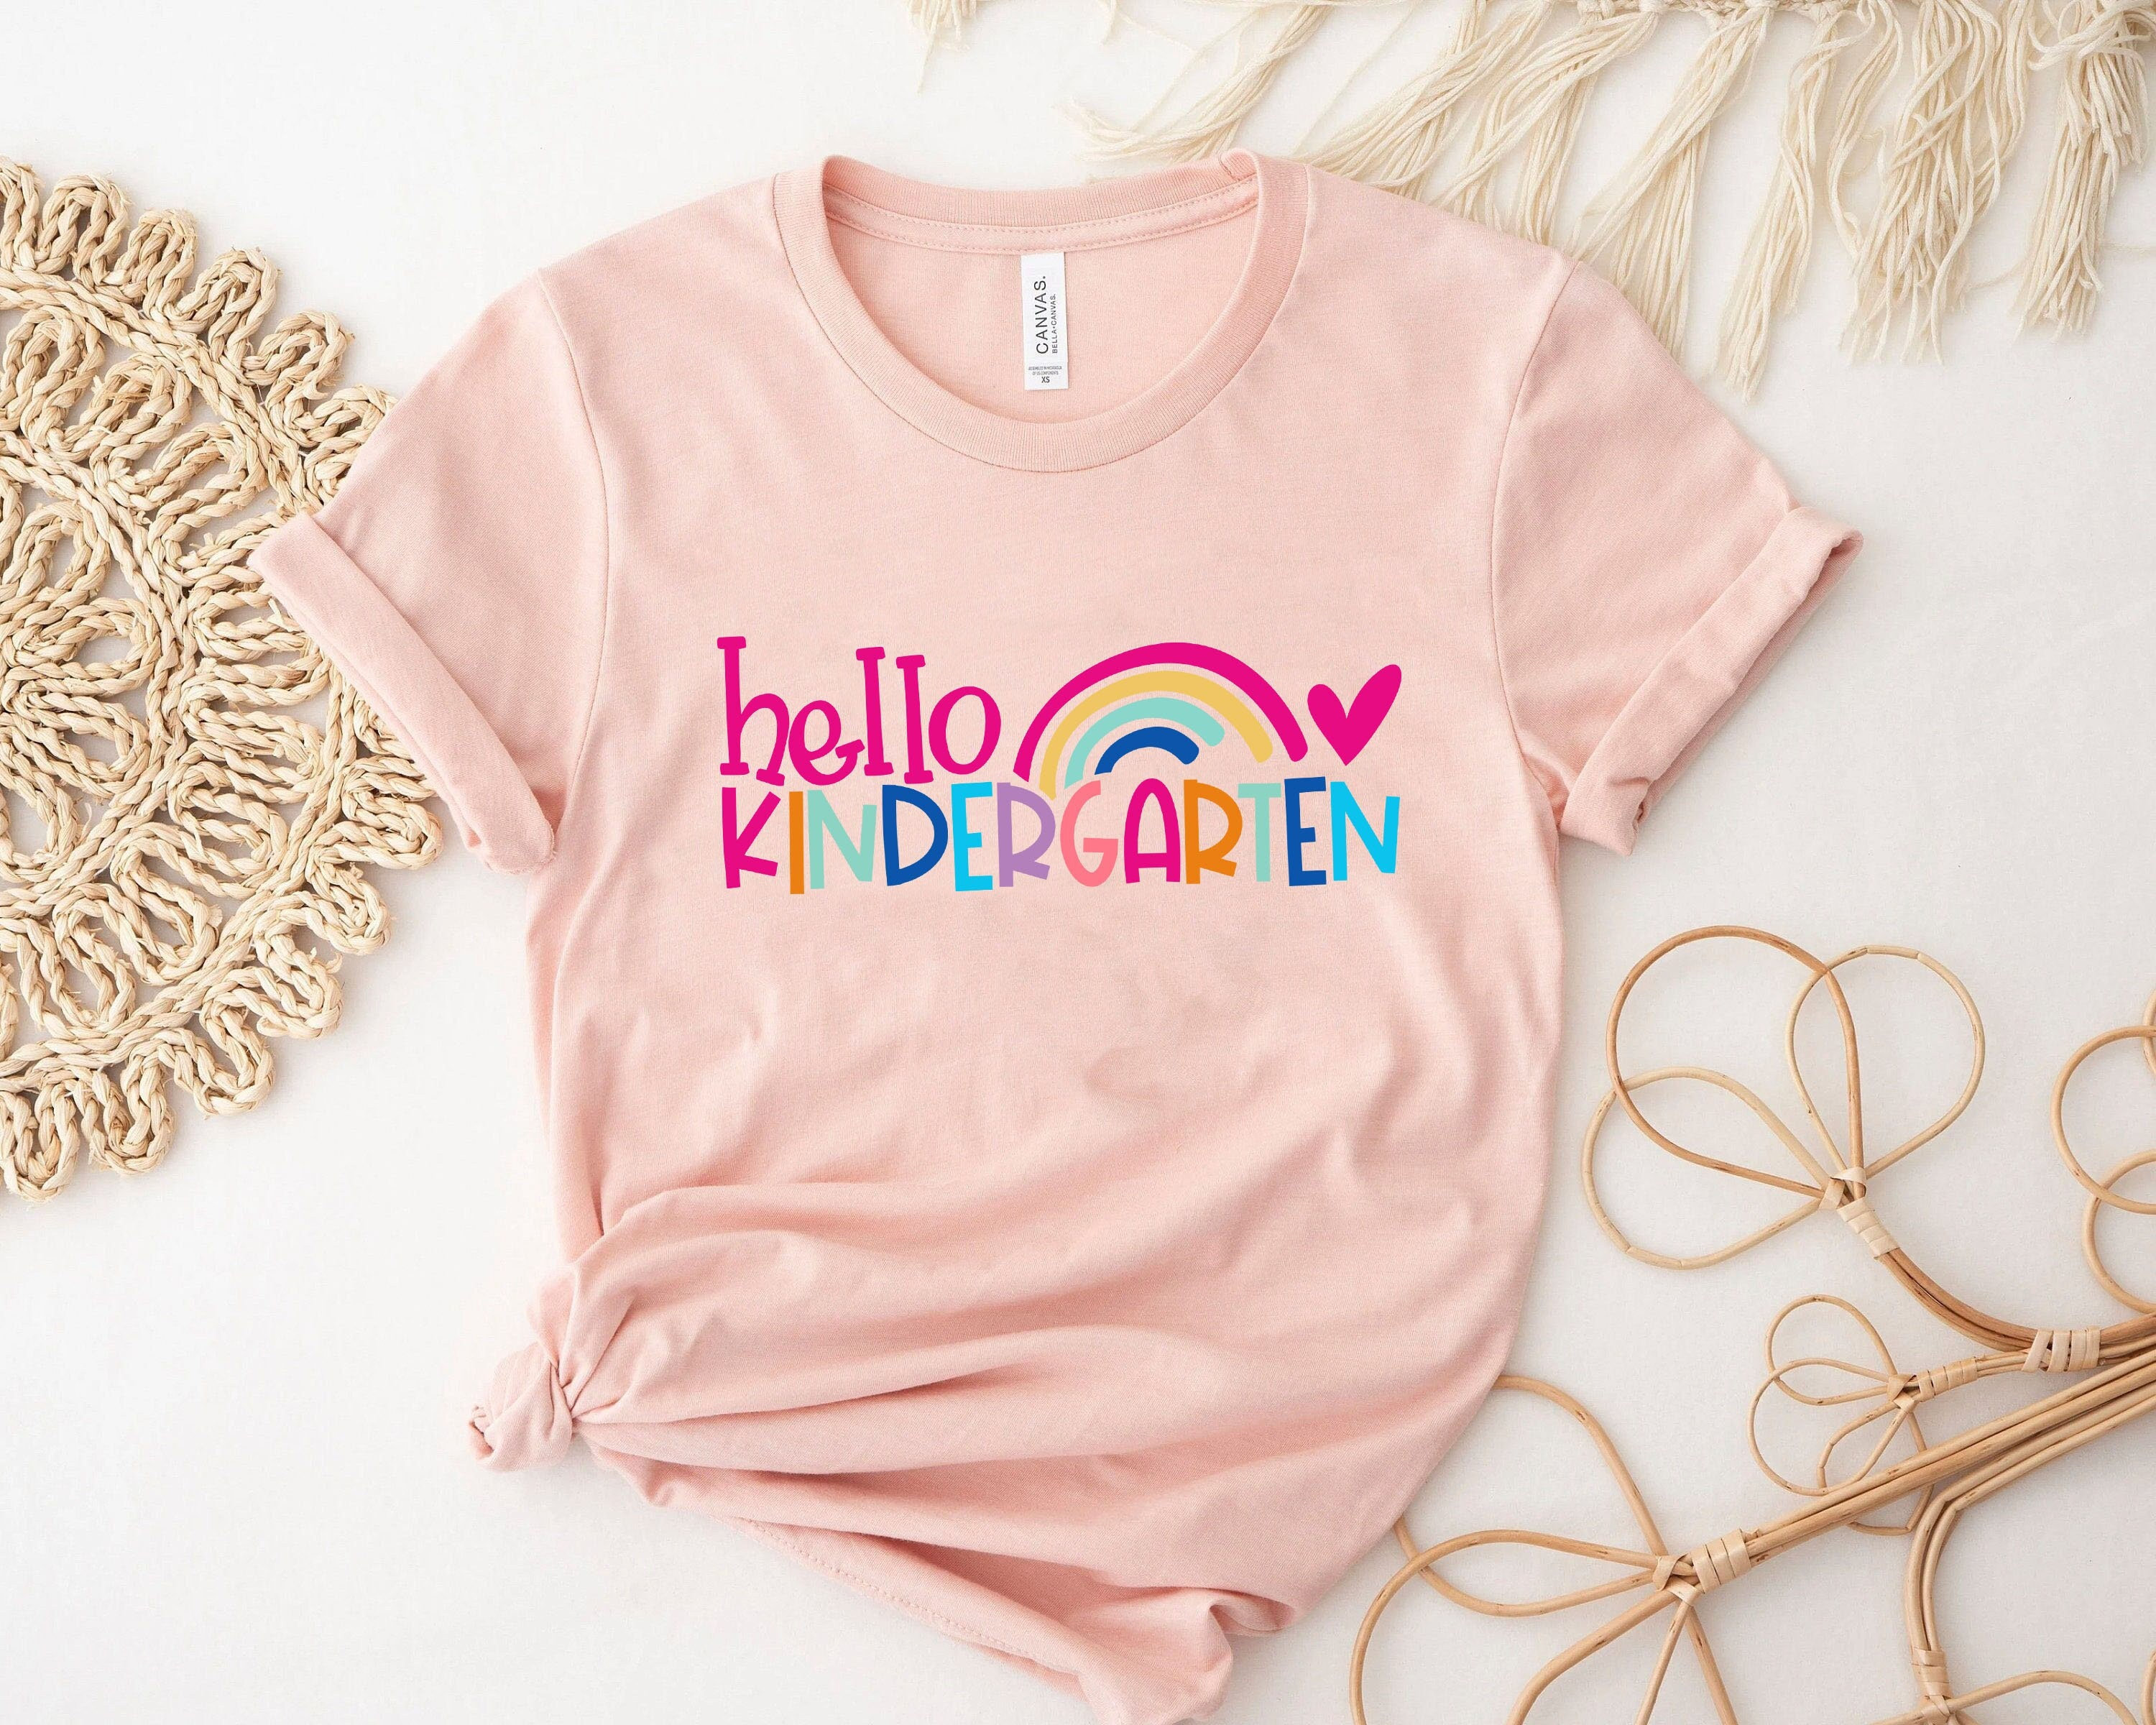 Kindergarten Shirts - Etsy